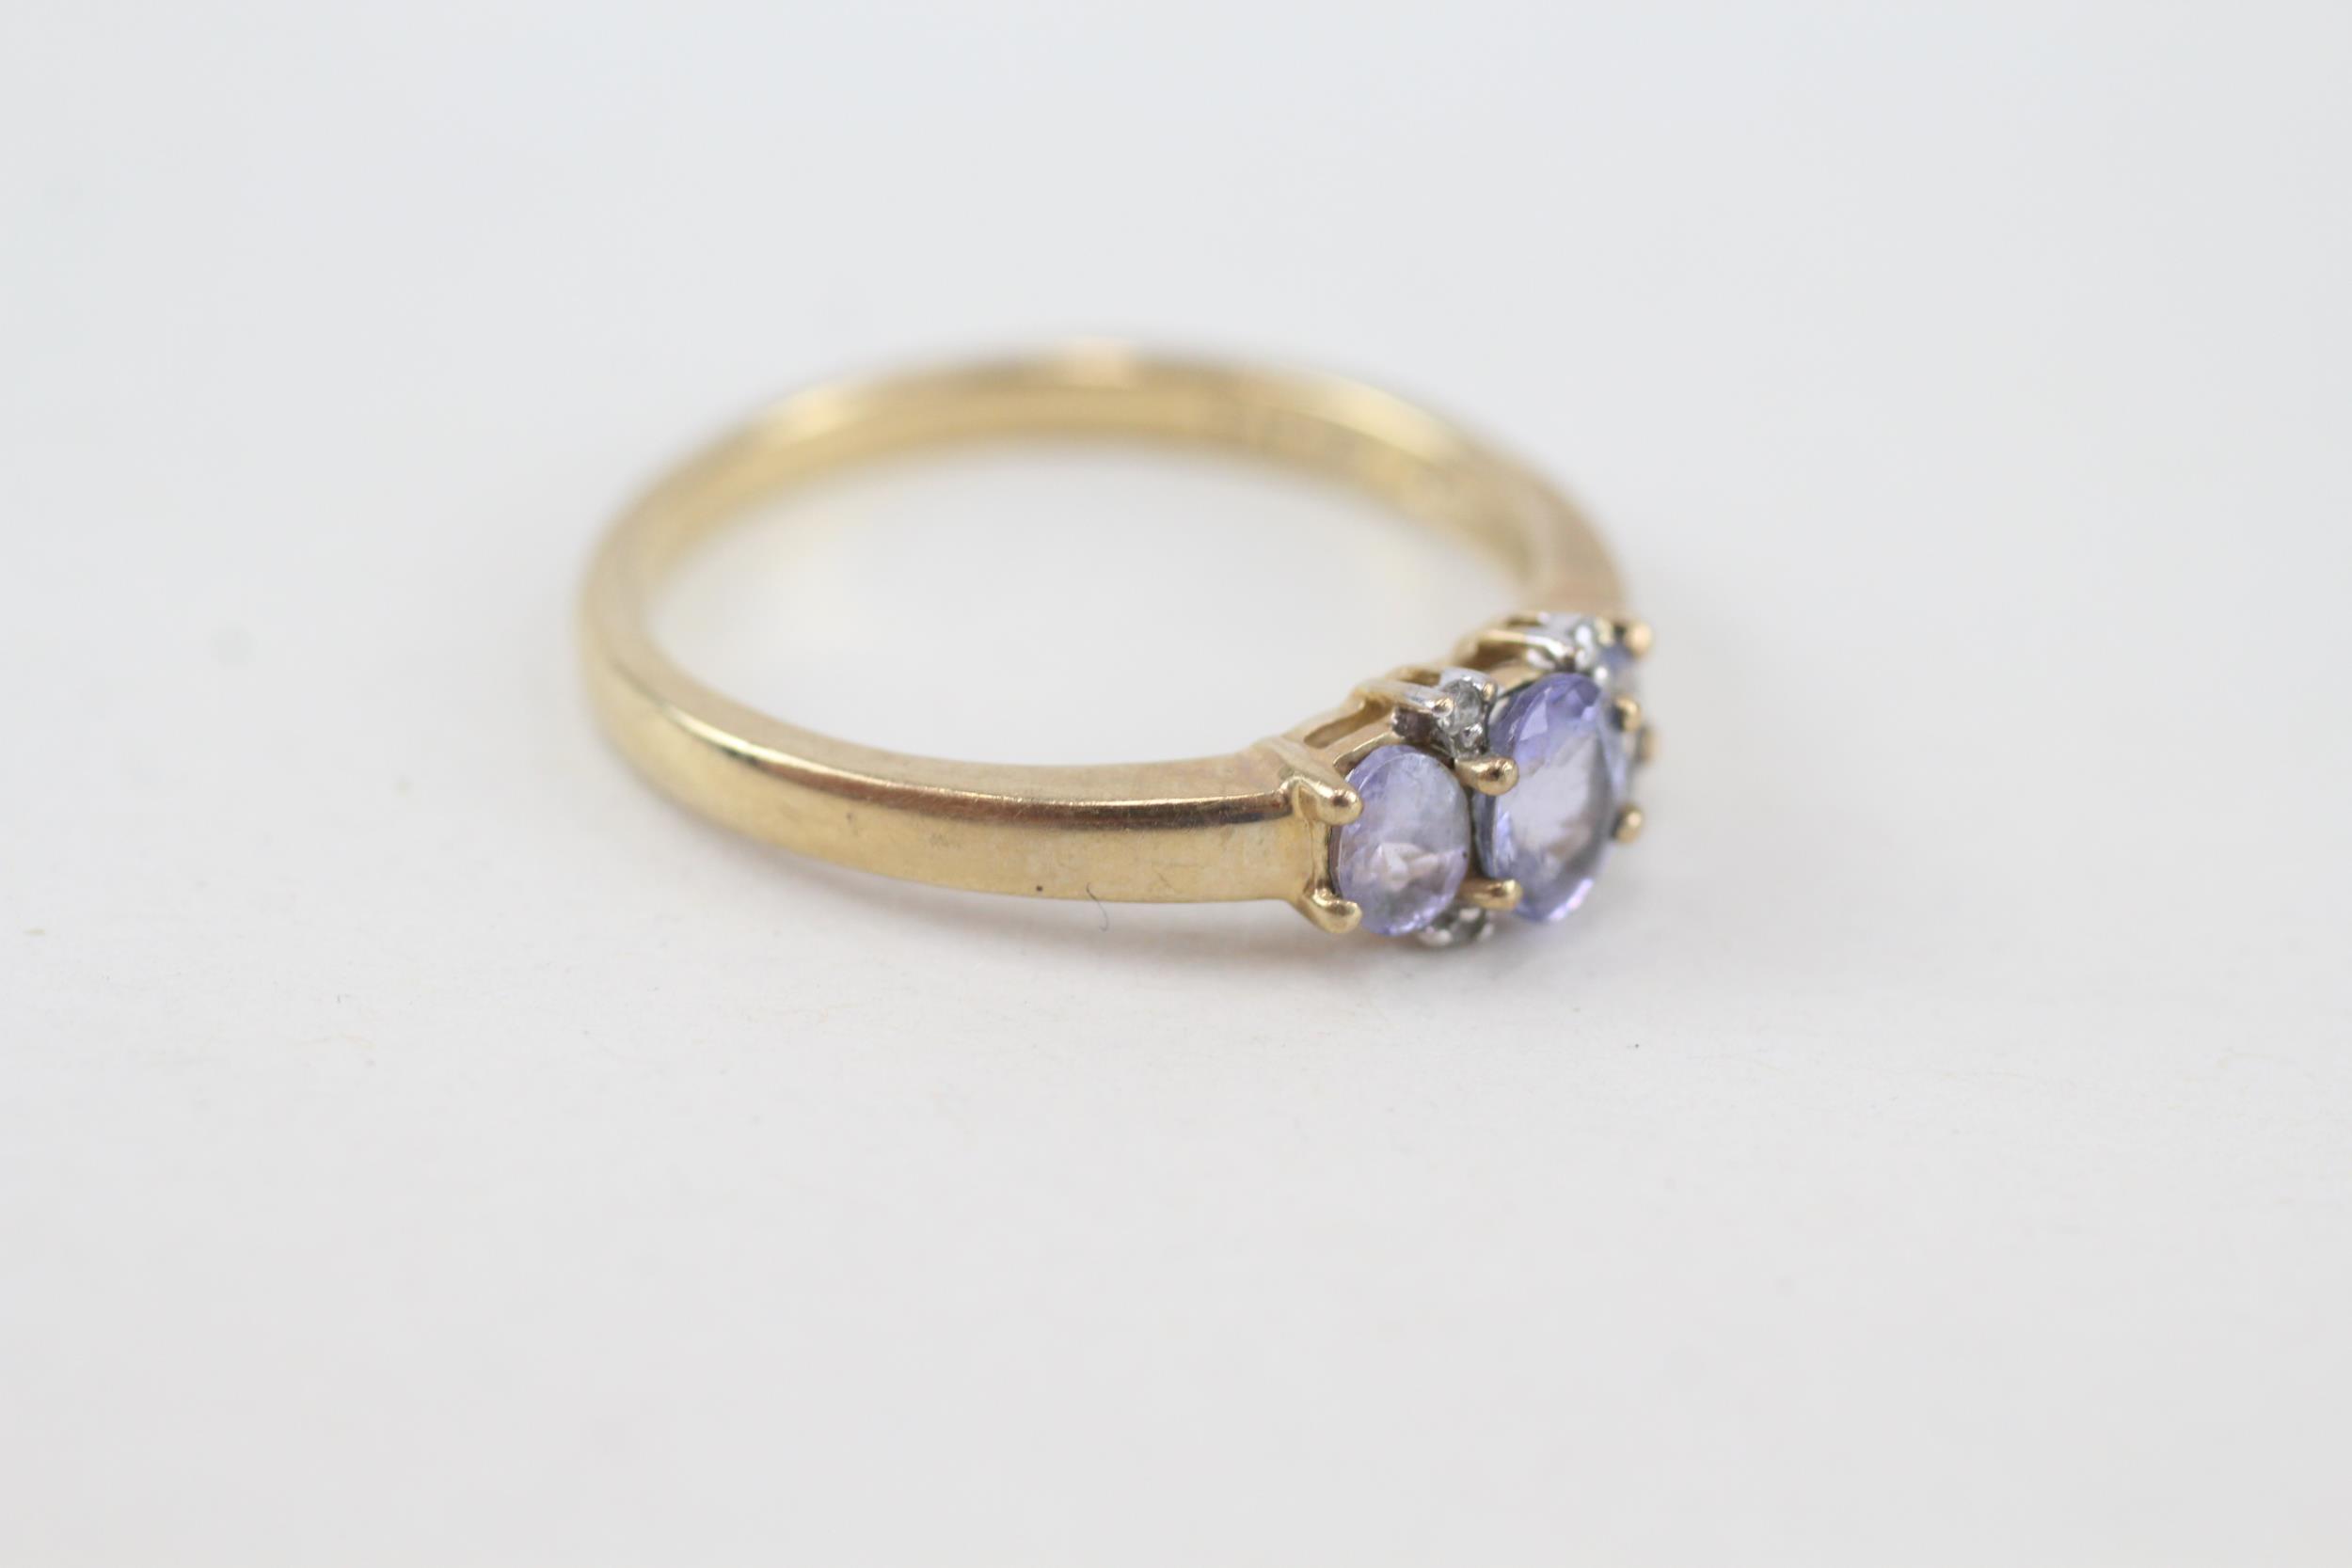 9ct gold oval cut tanzanite & diamond three stone ring, claw set (2g) Size P - Image 2 of 4